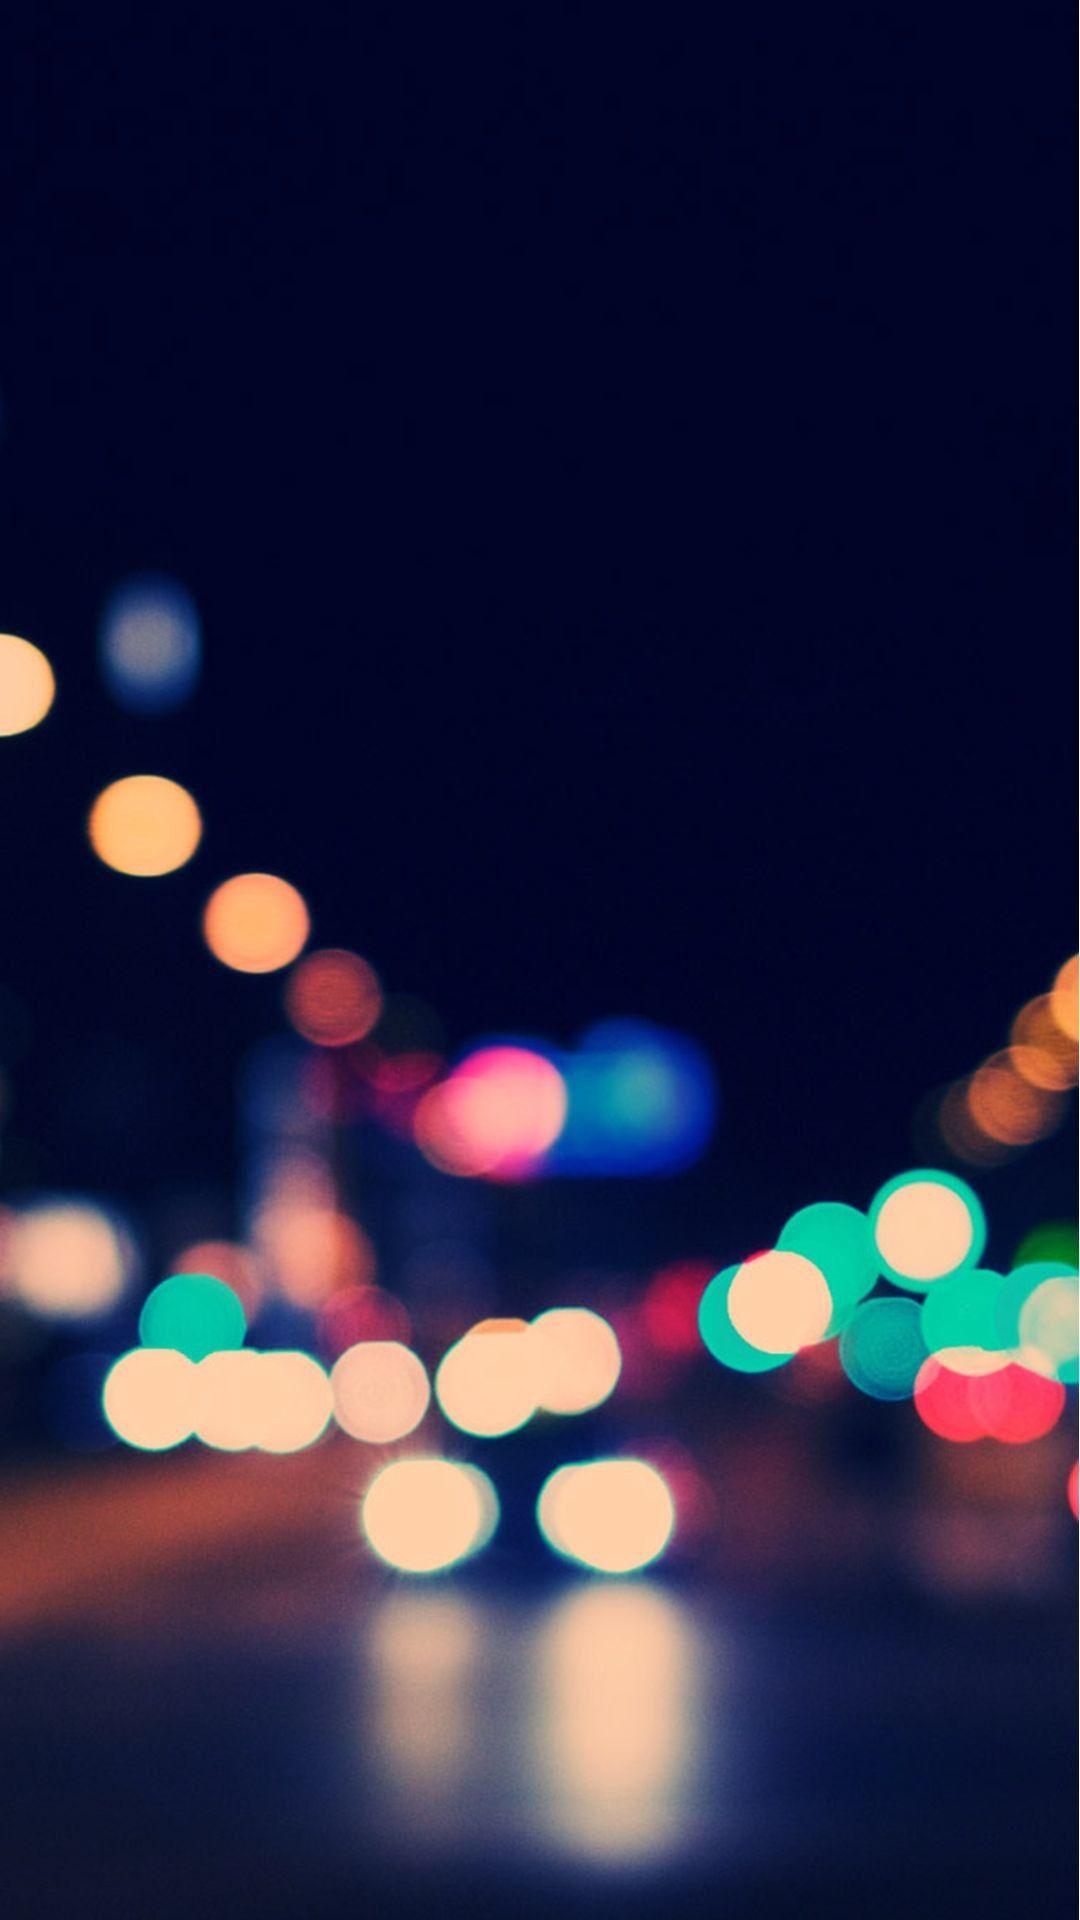 City Lights iPhone Wallpaper